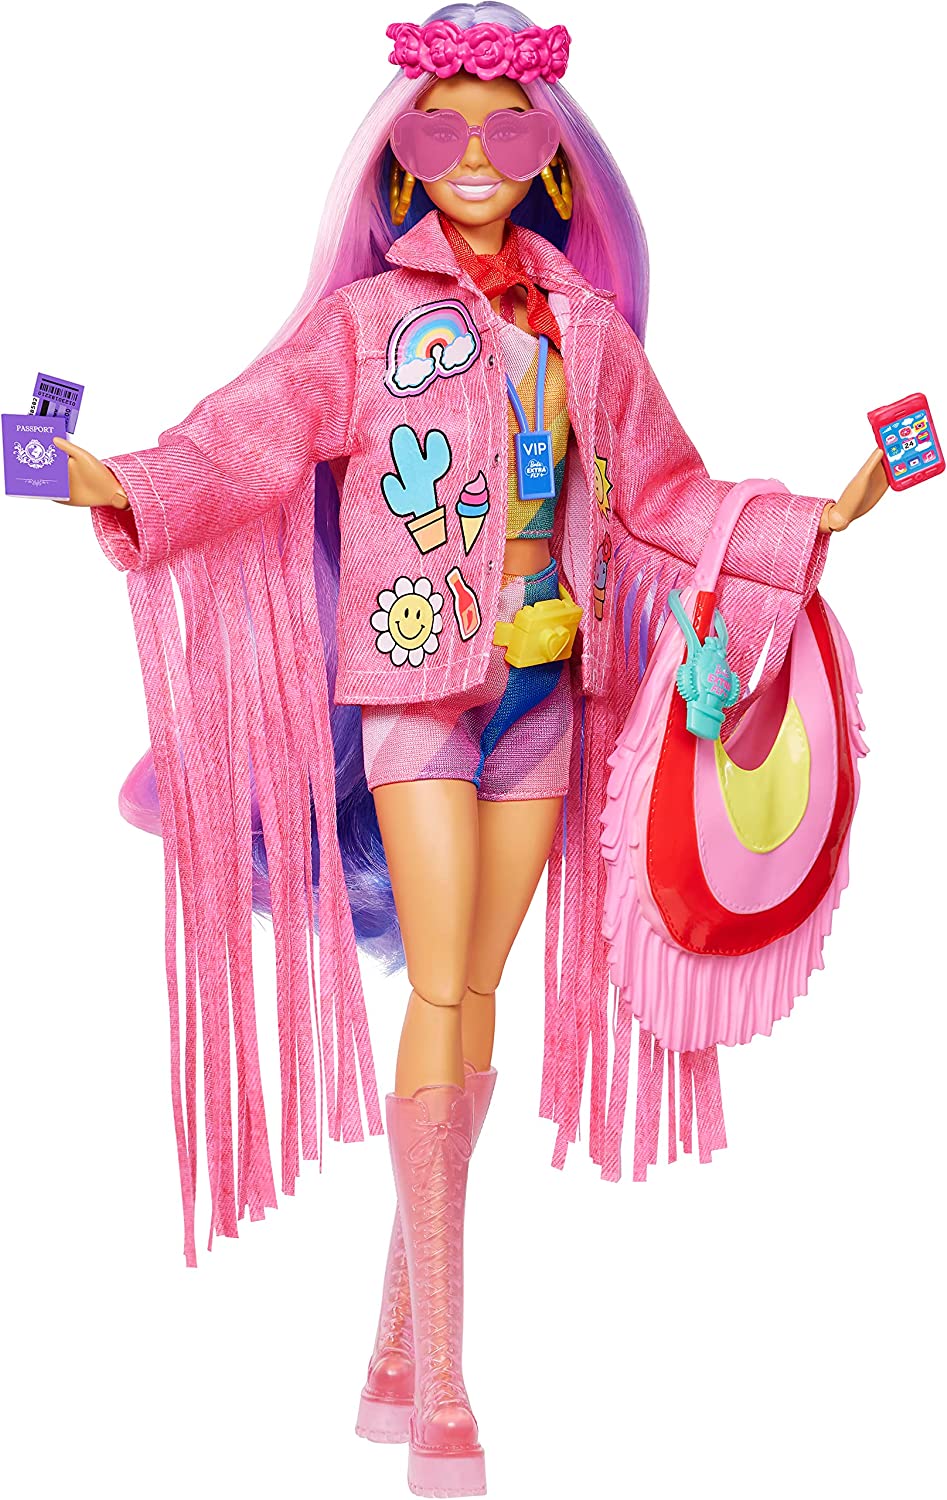 1682923909 Youloveit Com Barbie Extra Fly Desrt Doll 